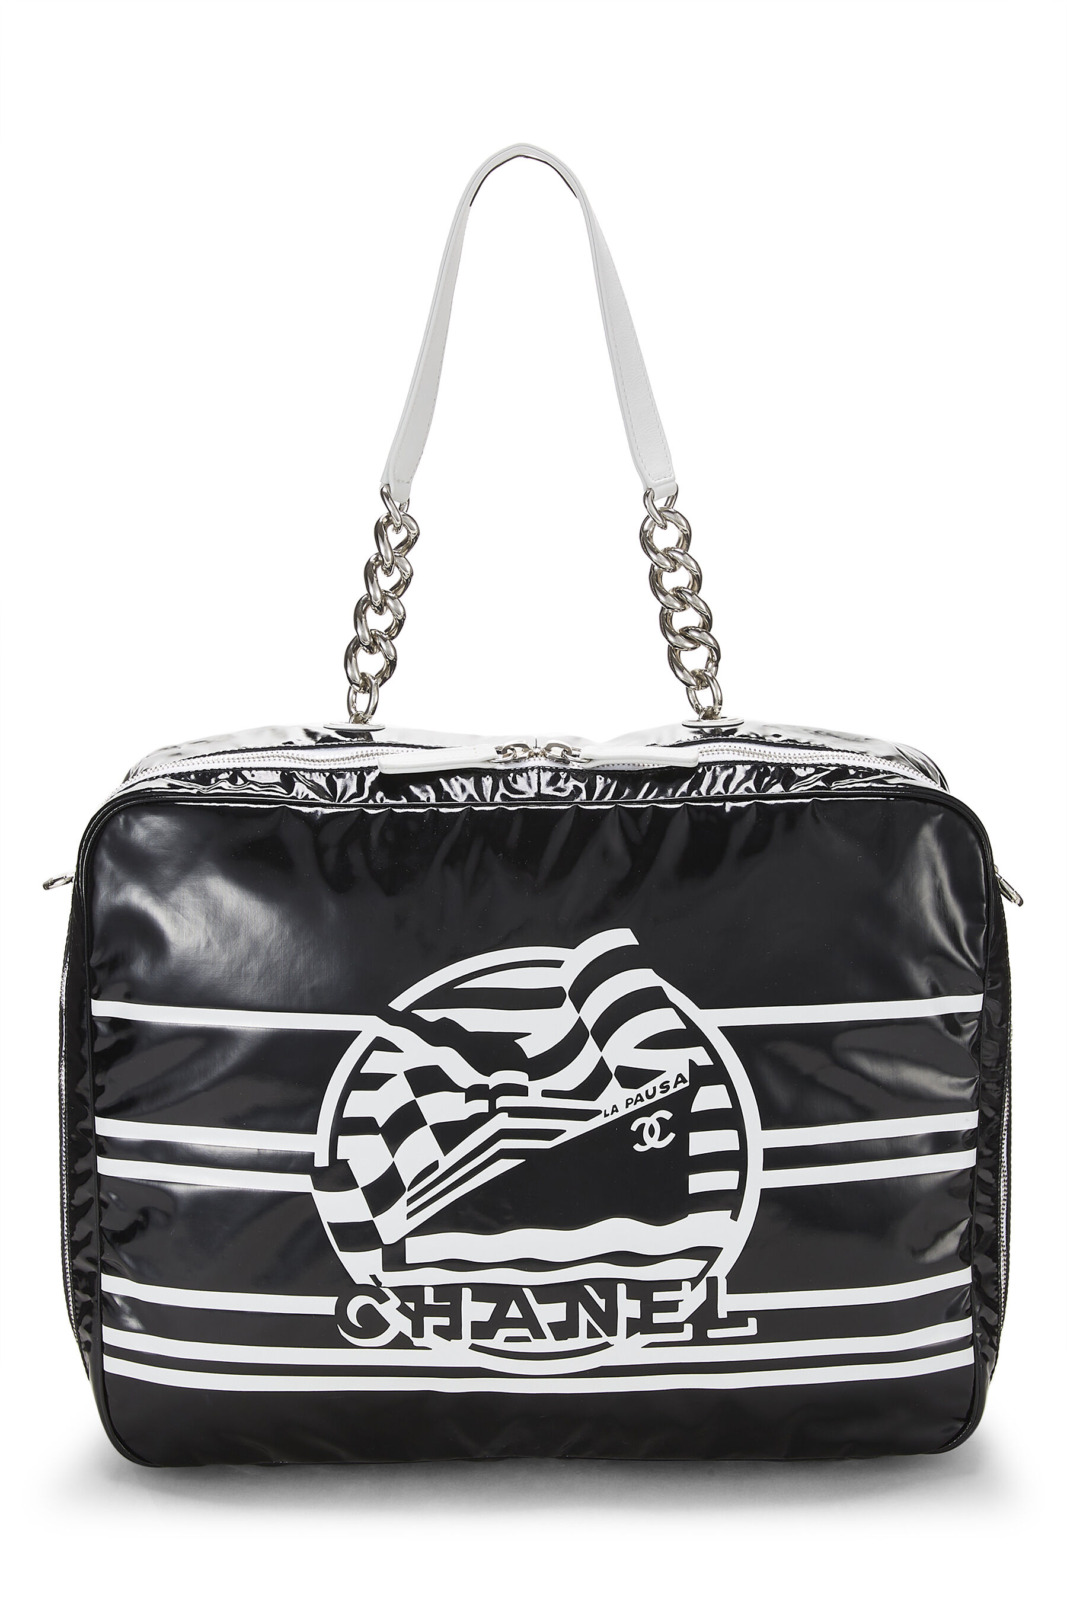 Chanel Bag Black - WGACA GOOFASH